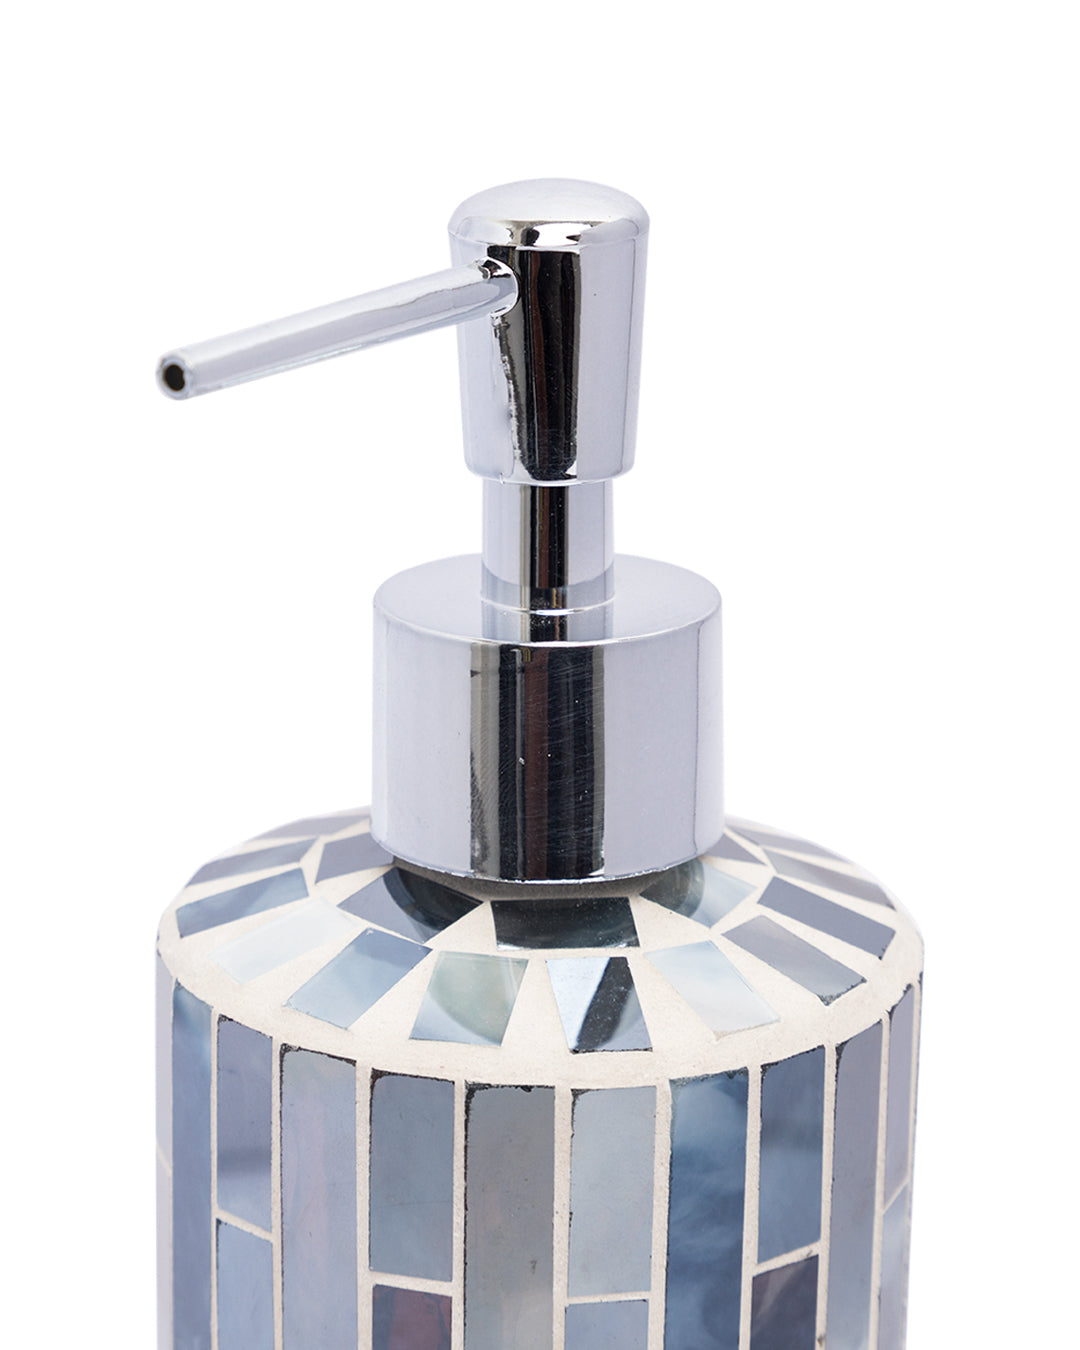 VON CASA Soap Dispenser, Silver, Glass, 400 mL